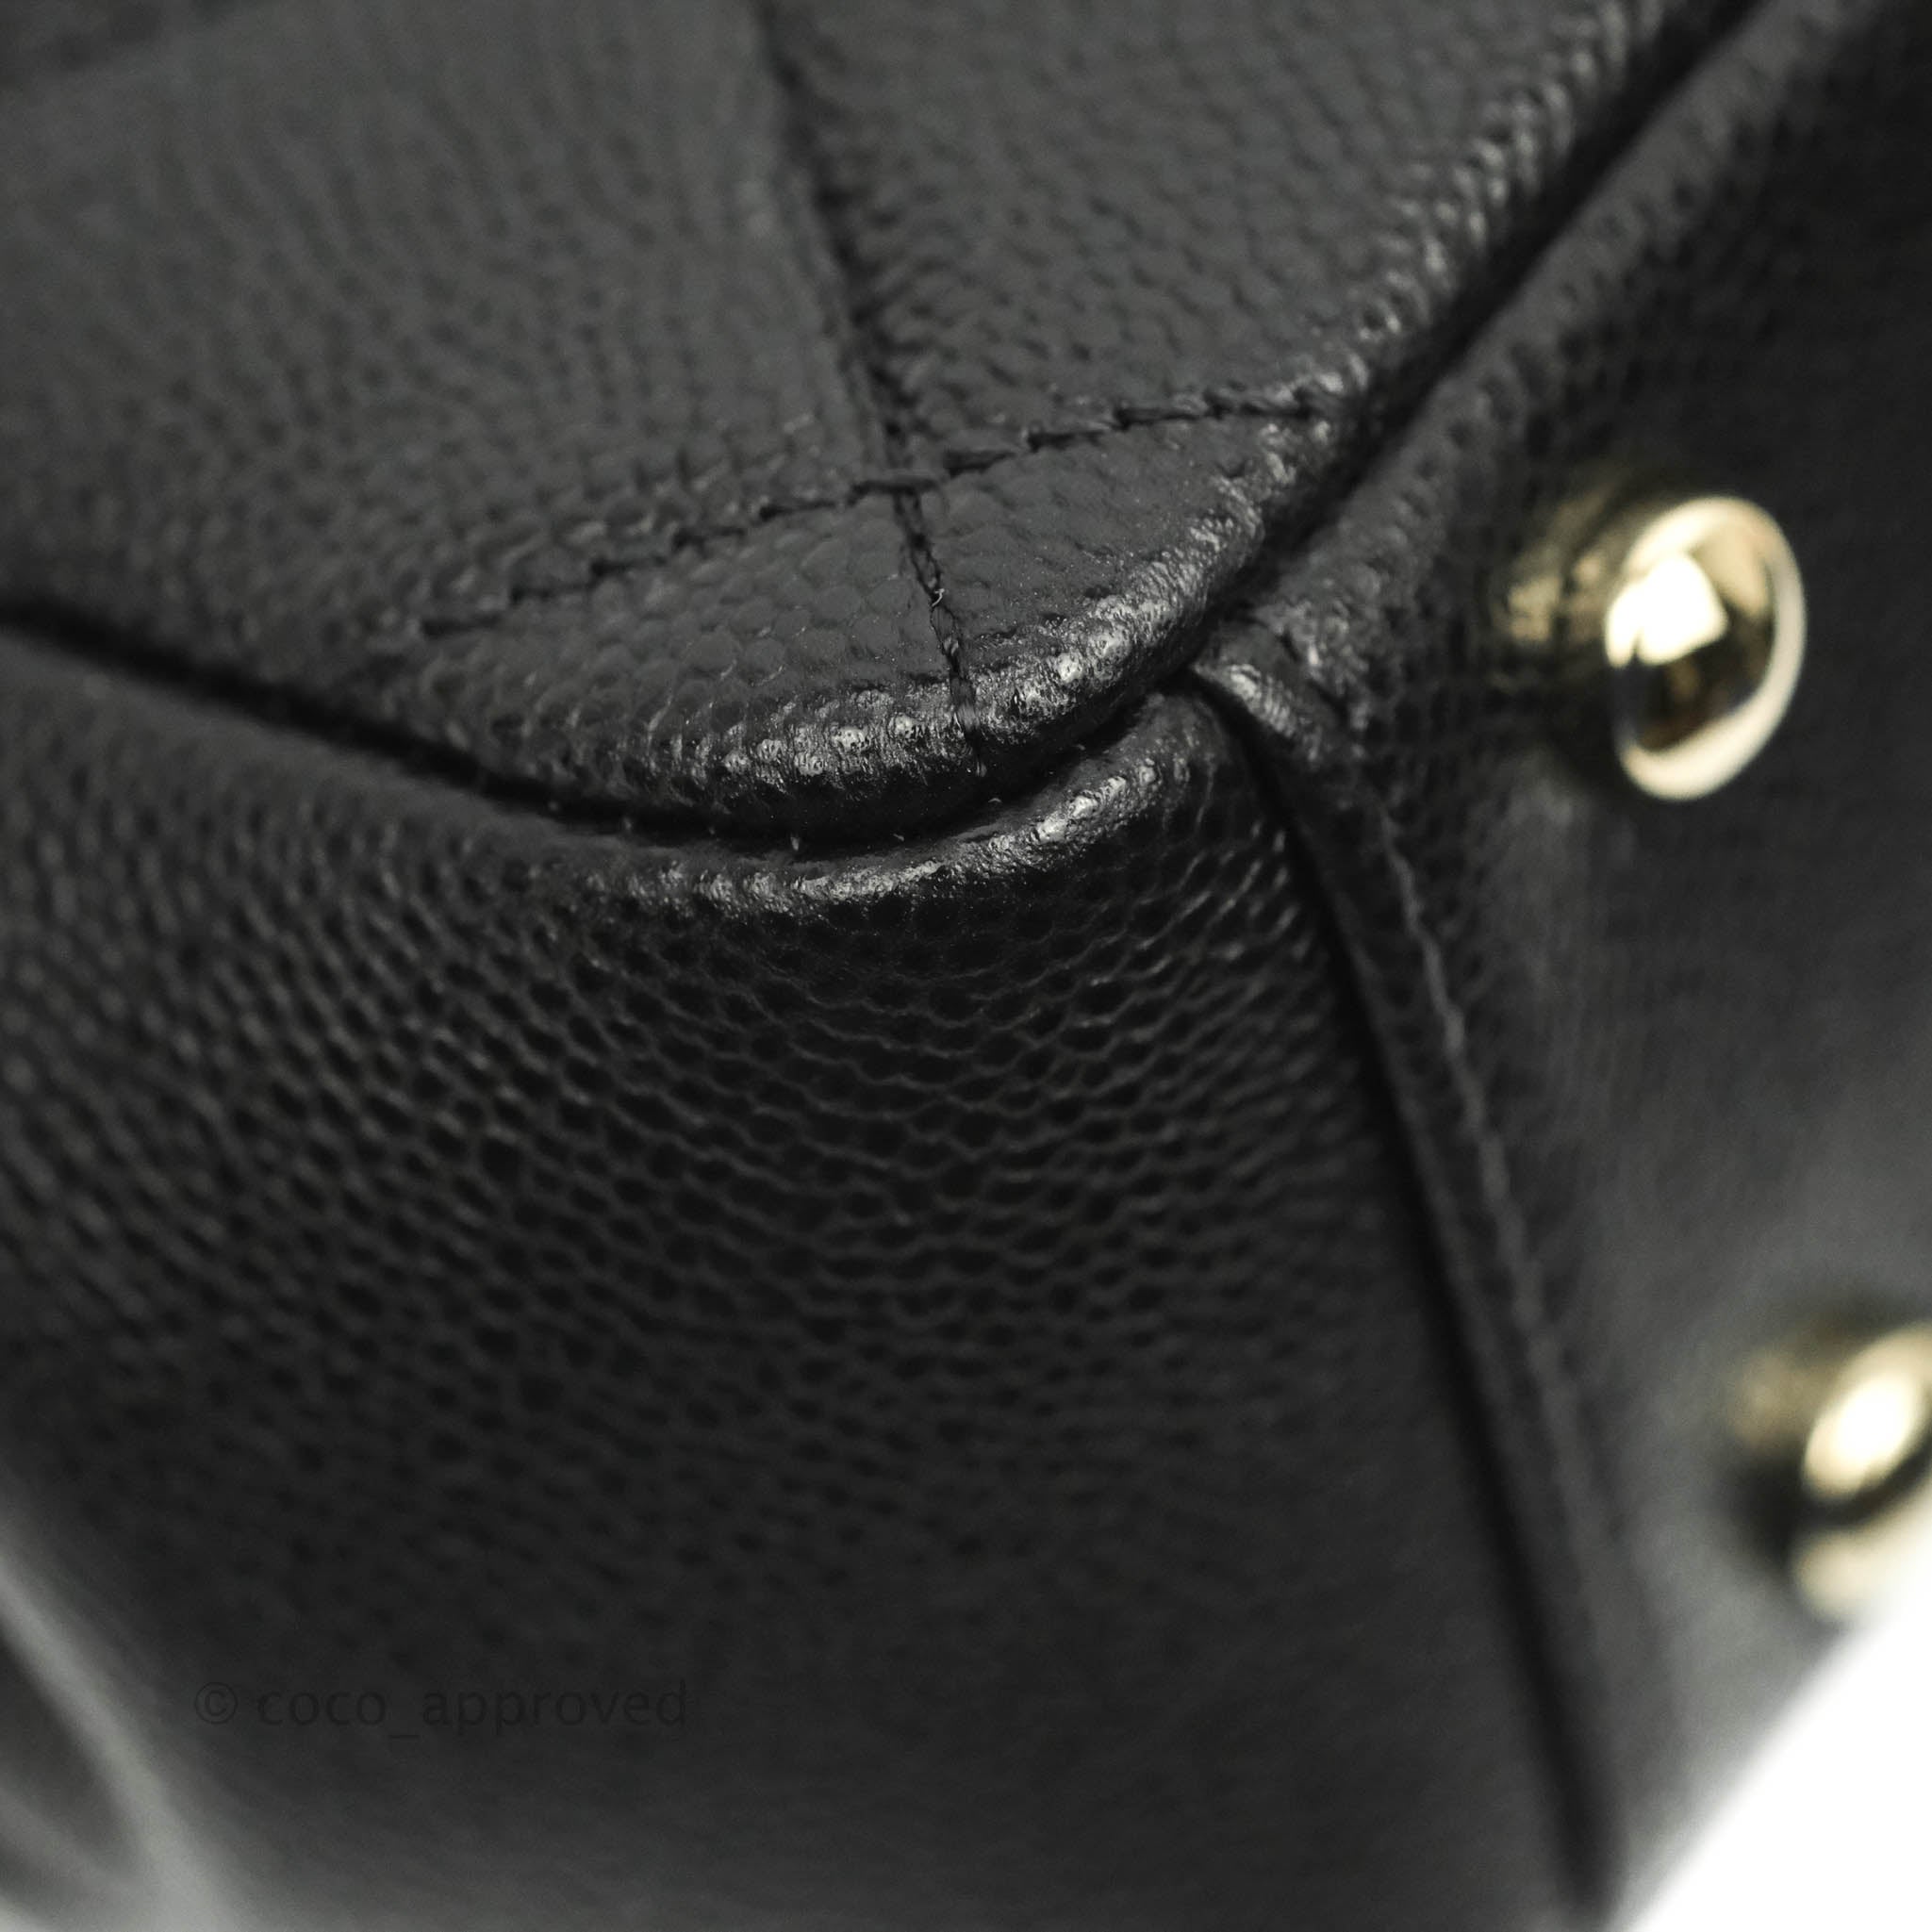 Chanel Affinity Flap Bag Size : - My Grande Shoppes 英国代购